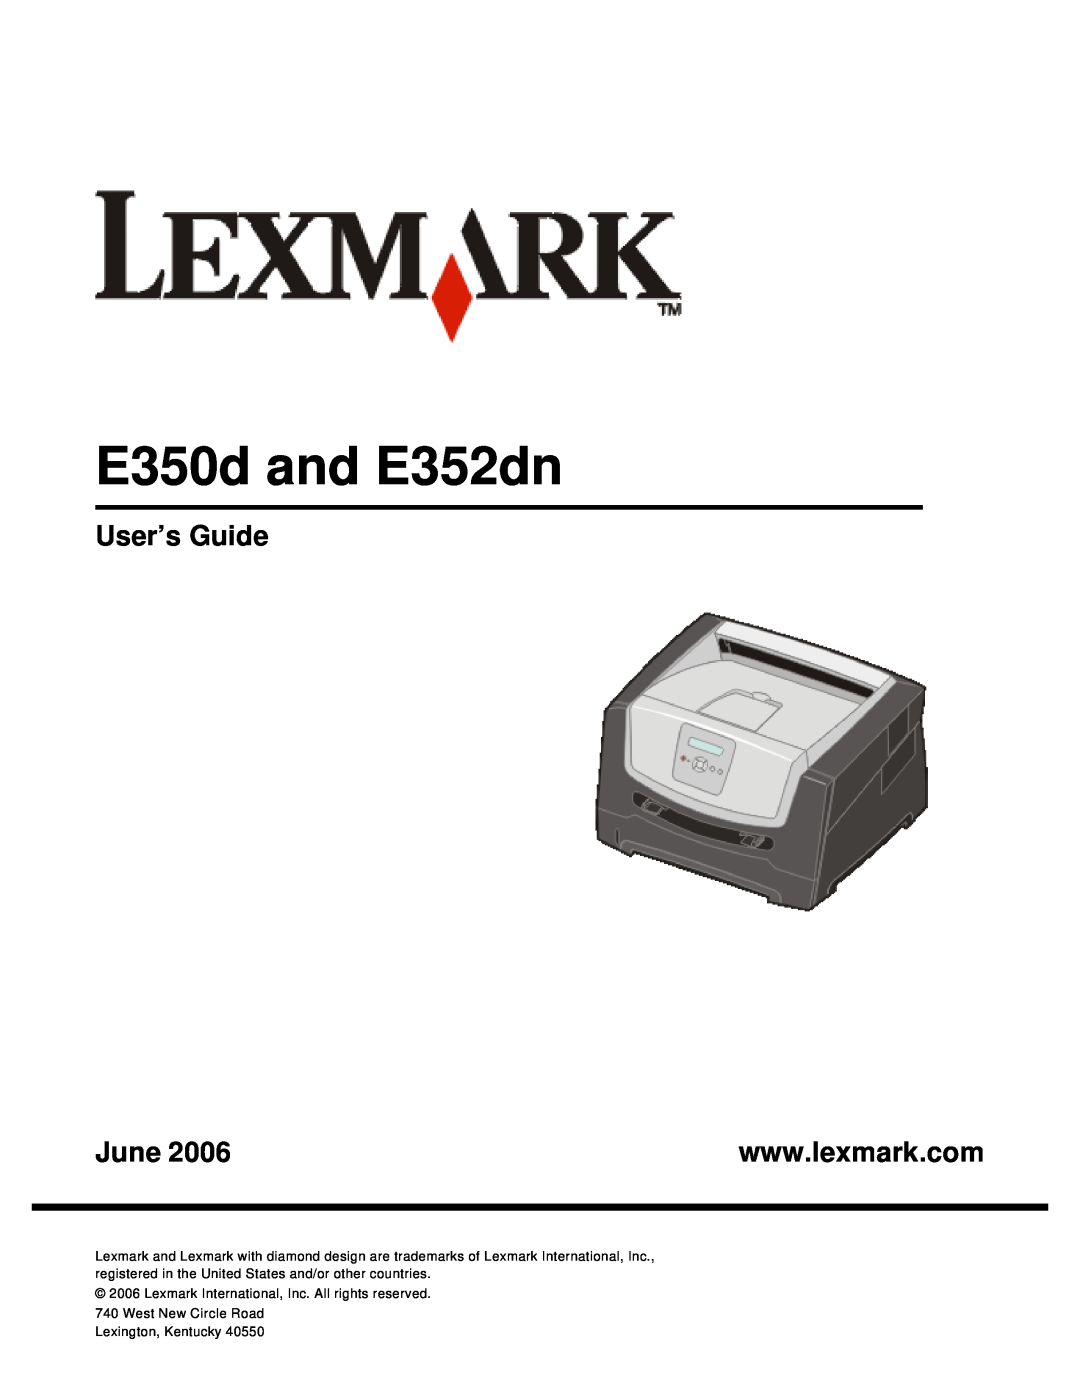 Lexmark manual E350d and E352dn, User’s Guide, June 